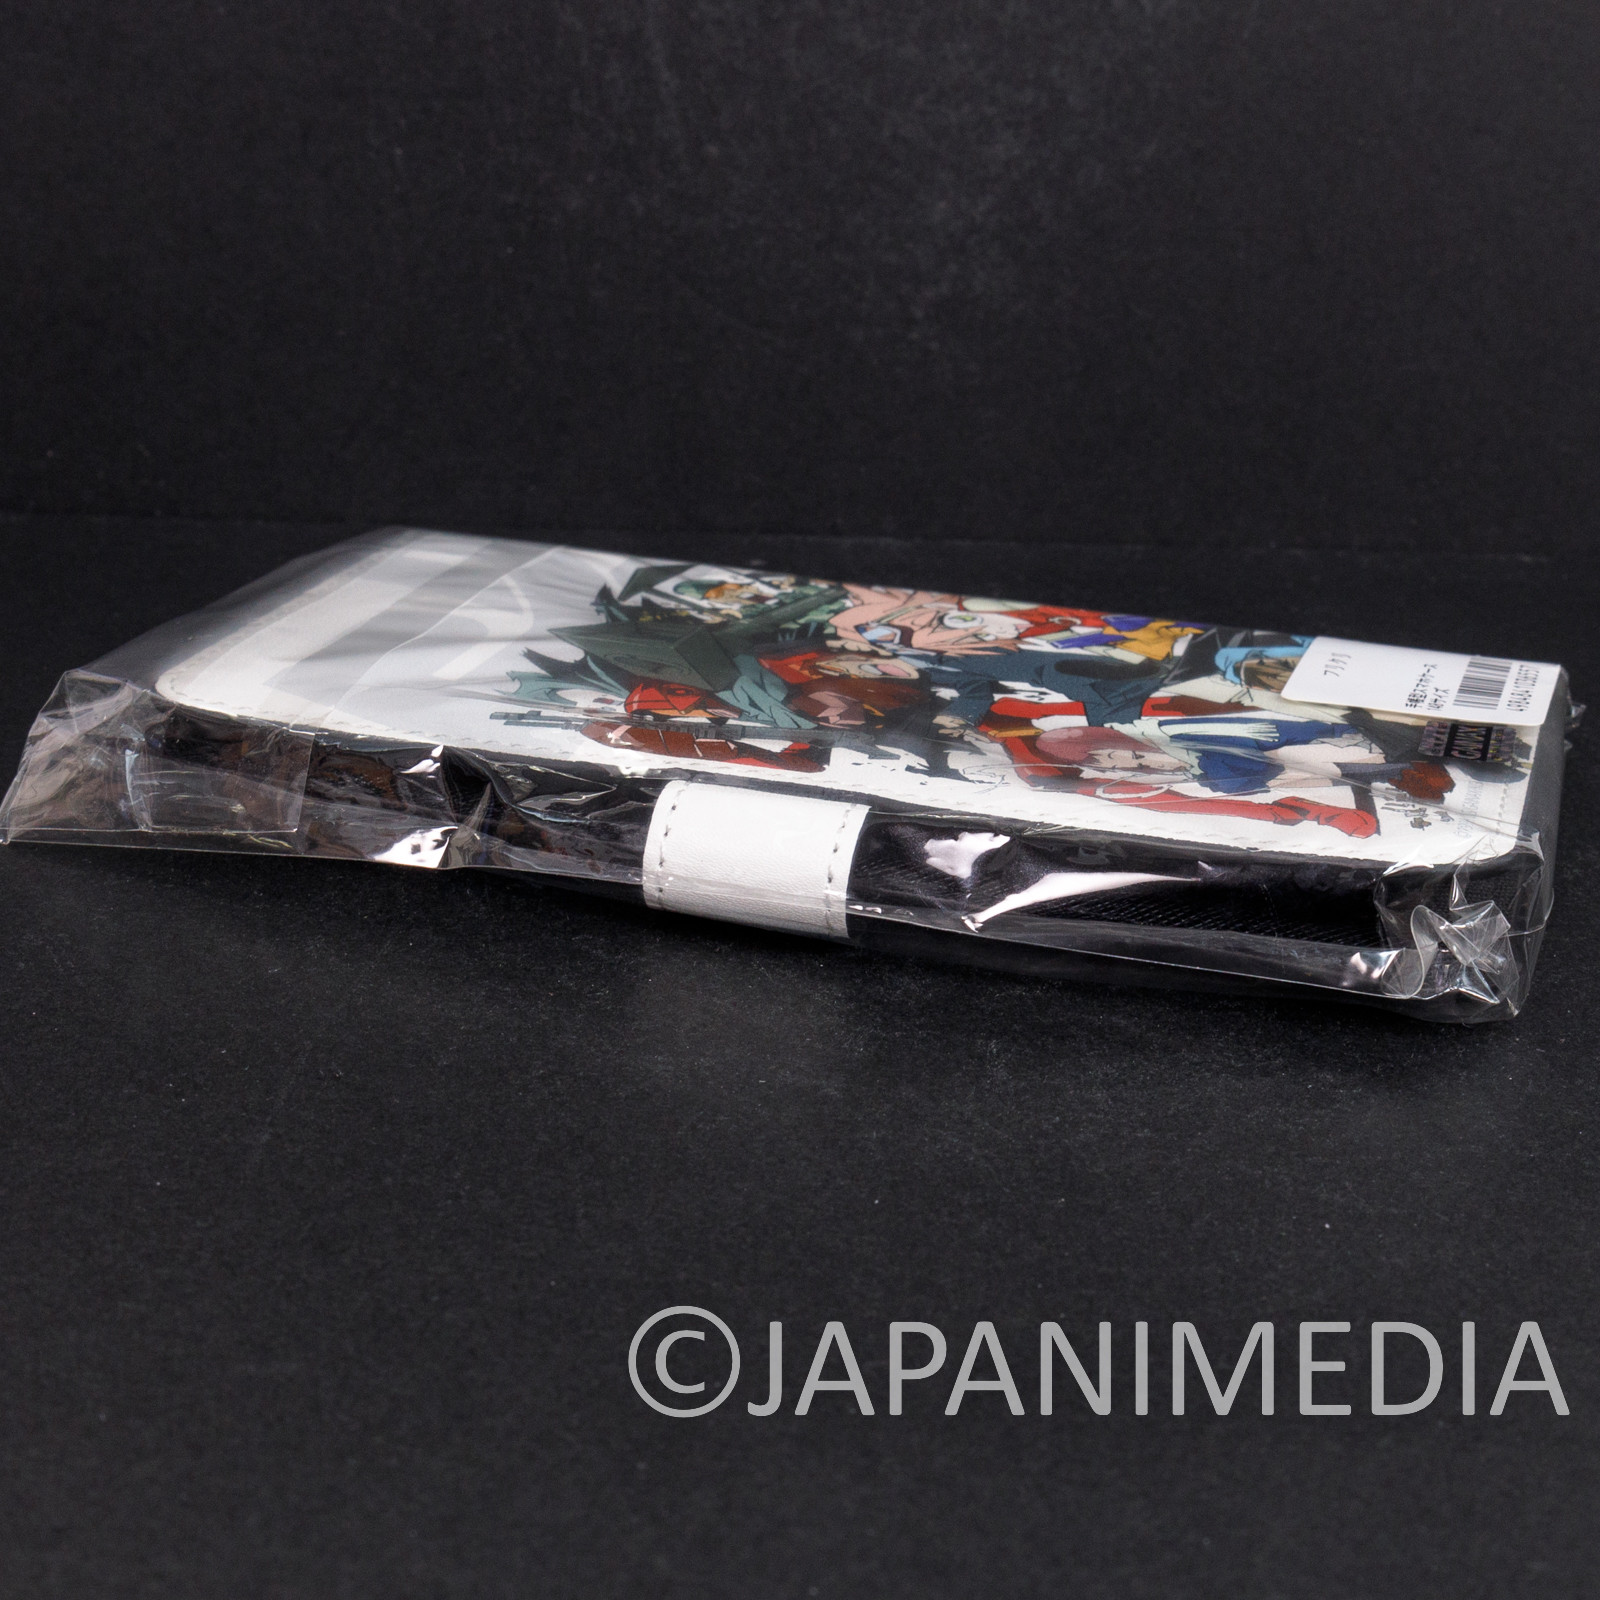 FLCL Notebook type Smart Phone Case Holder GAINAX JAPAN ANIME